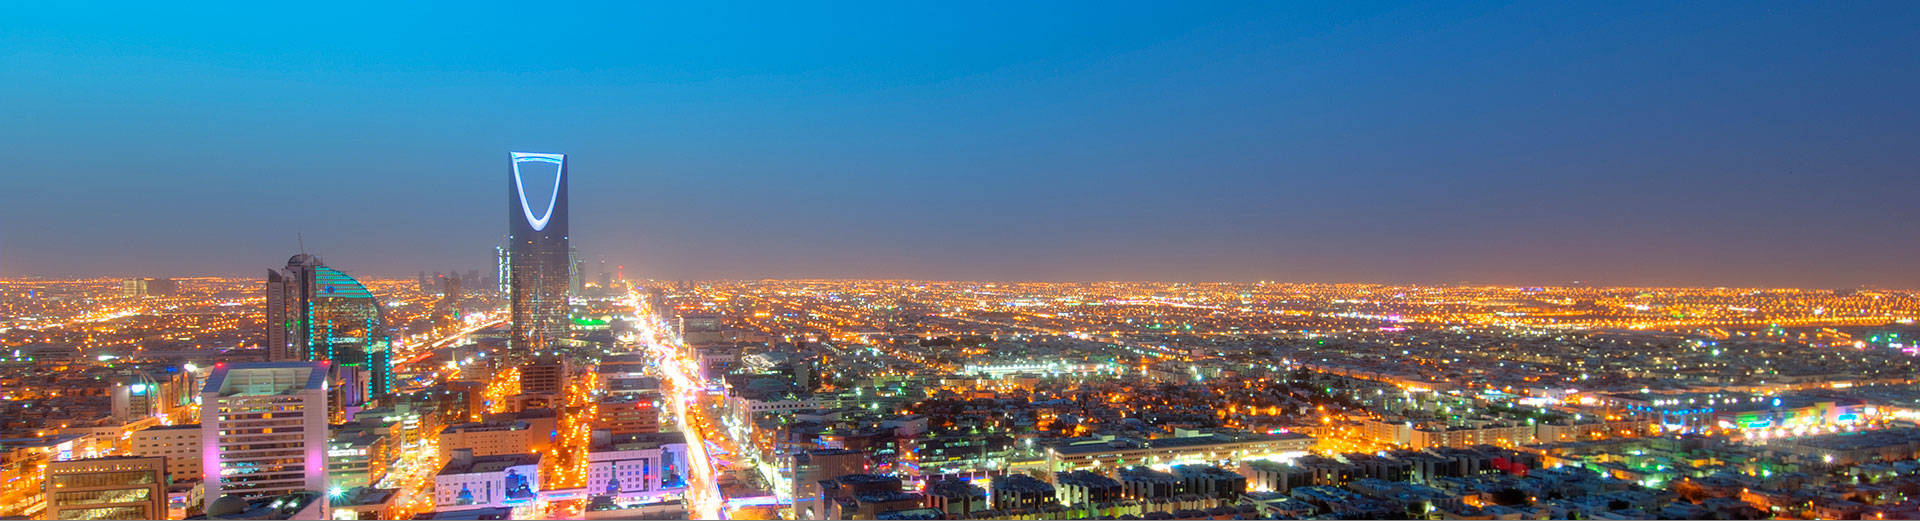 Vibrant Skyline Of Riyadh At Night Wallpaper